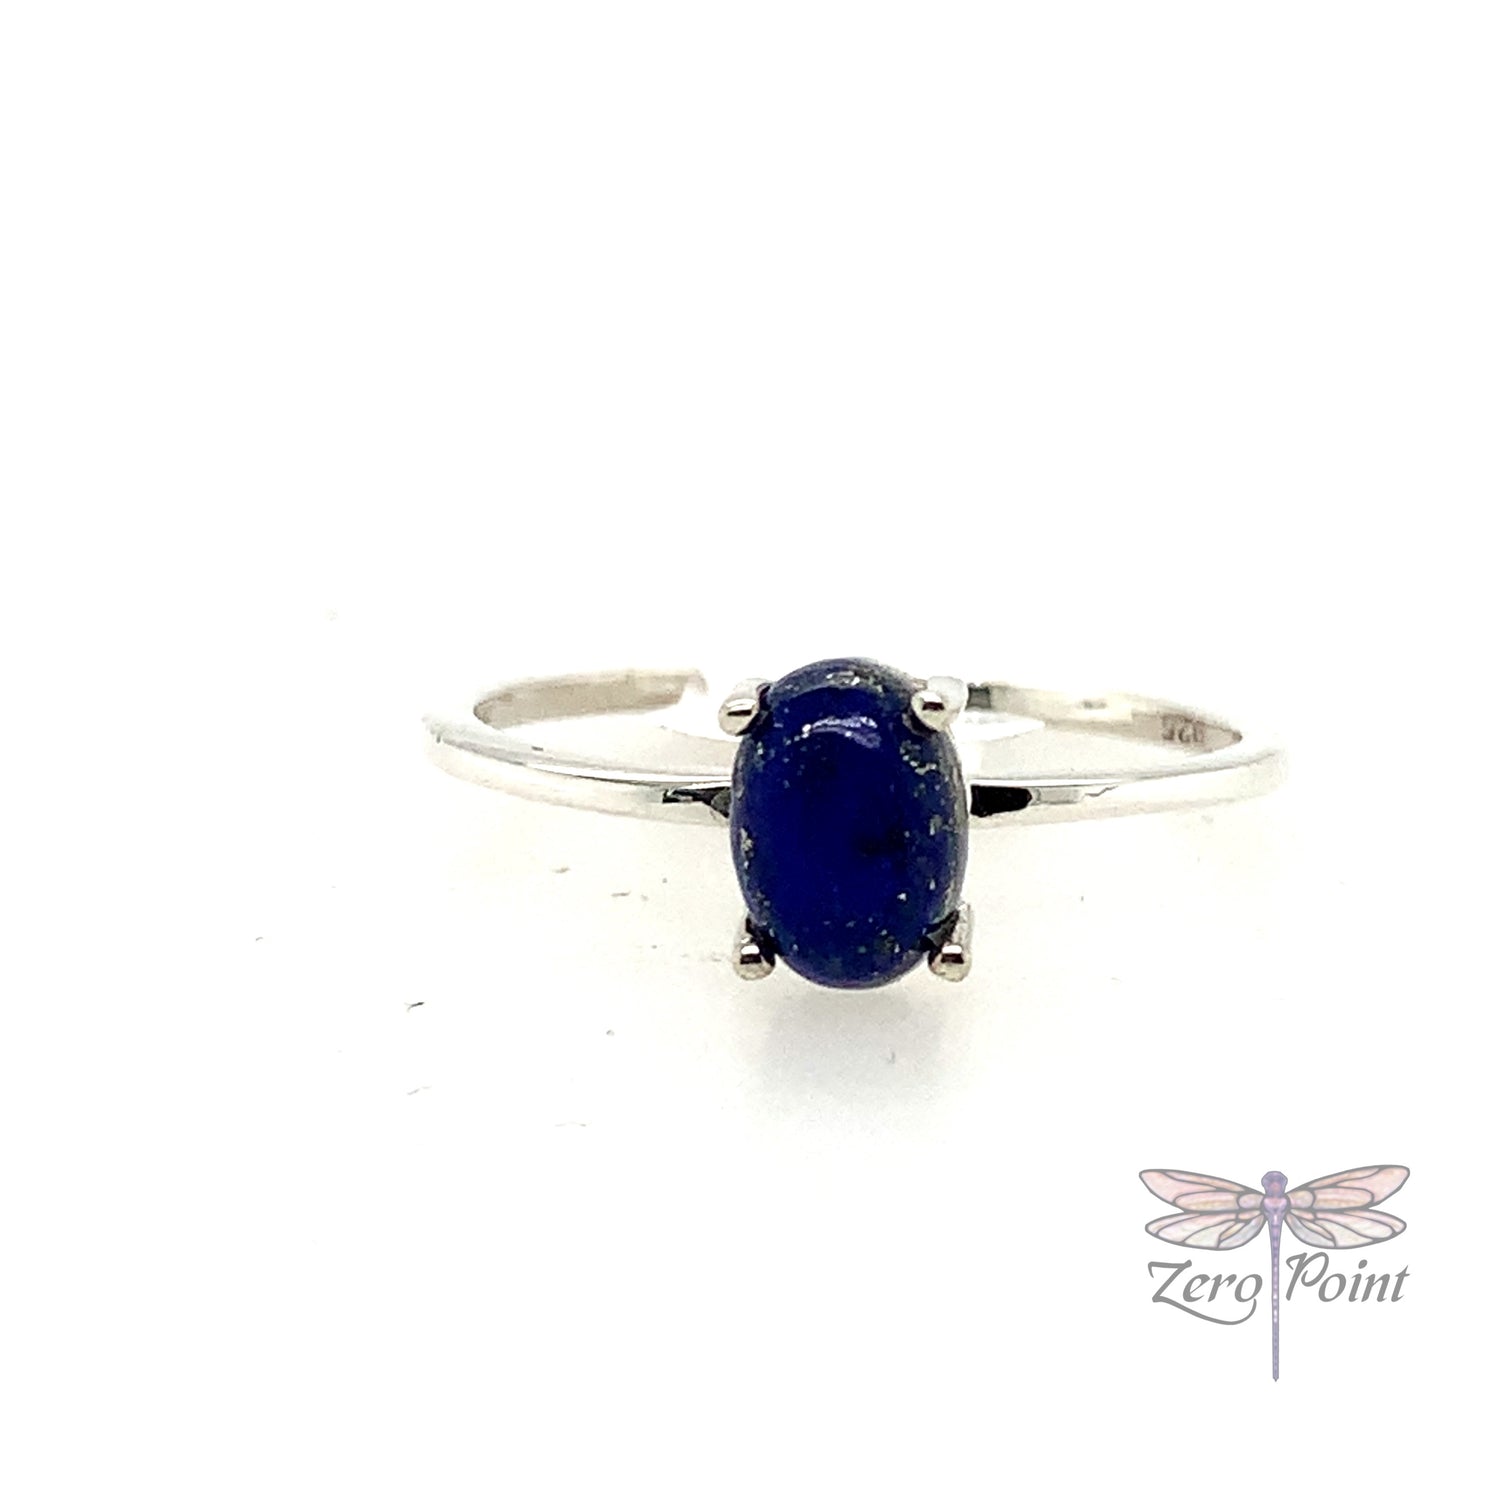 Lapis Lazuli Ring 2548 - Zero Point Crystals